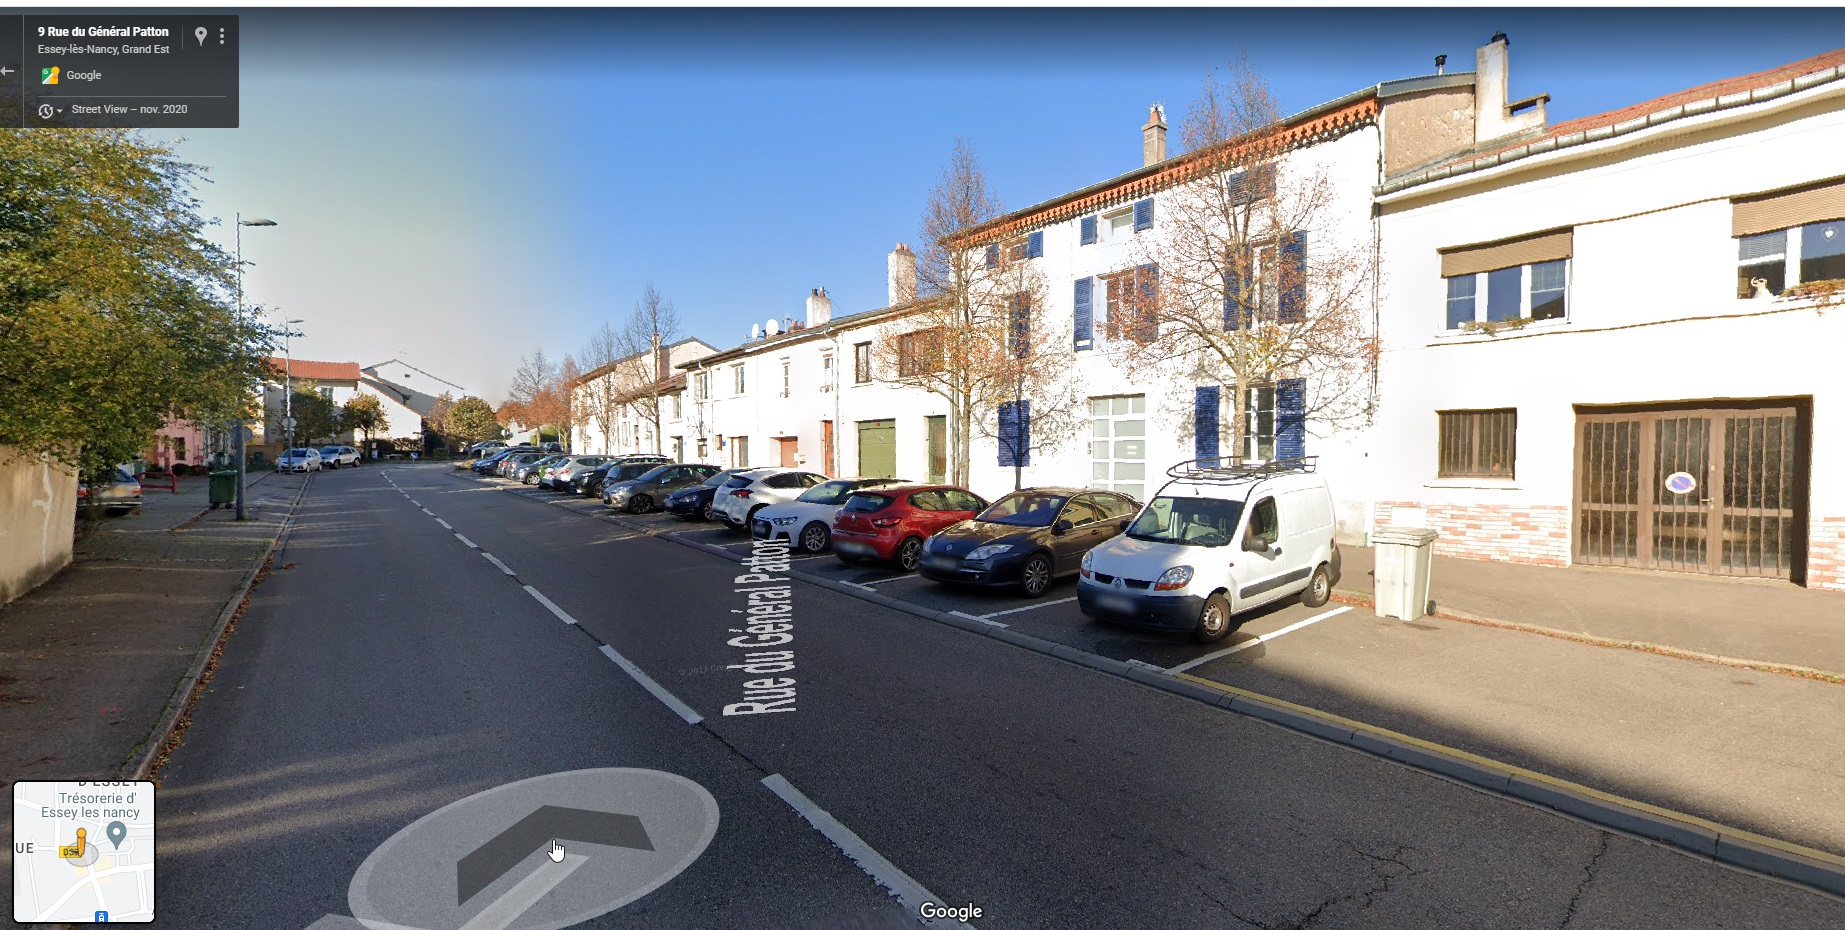 essey 9 Rue du Général Patton - Google Maps.jpg